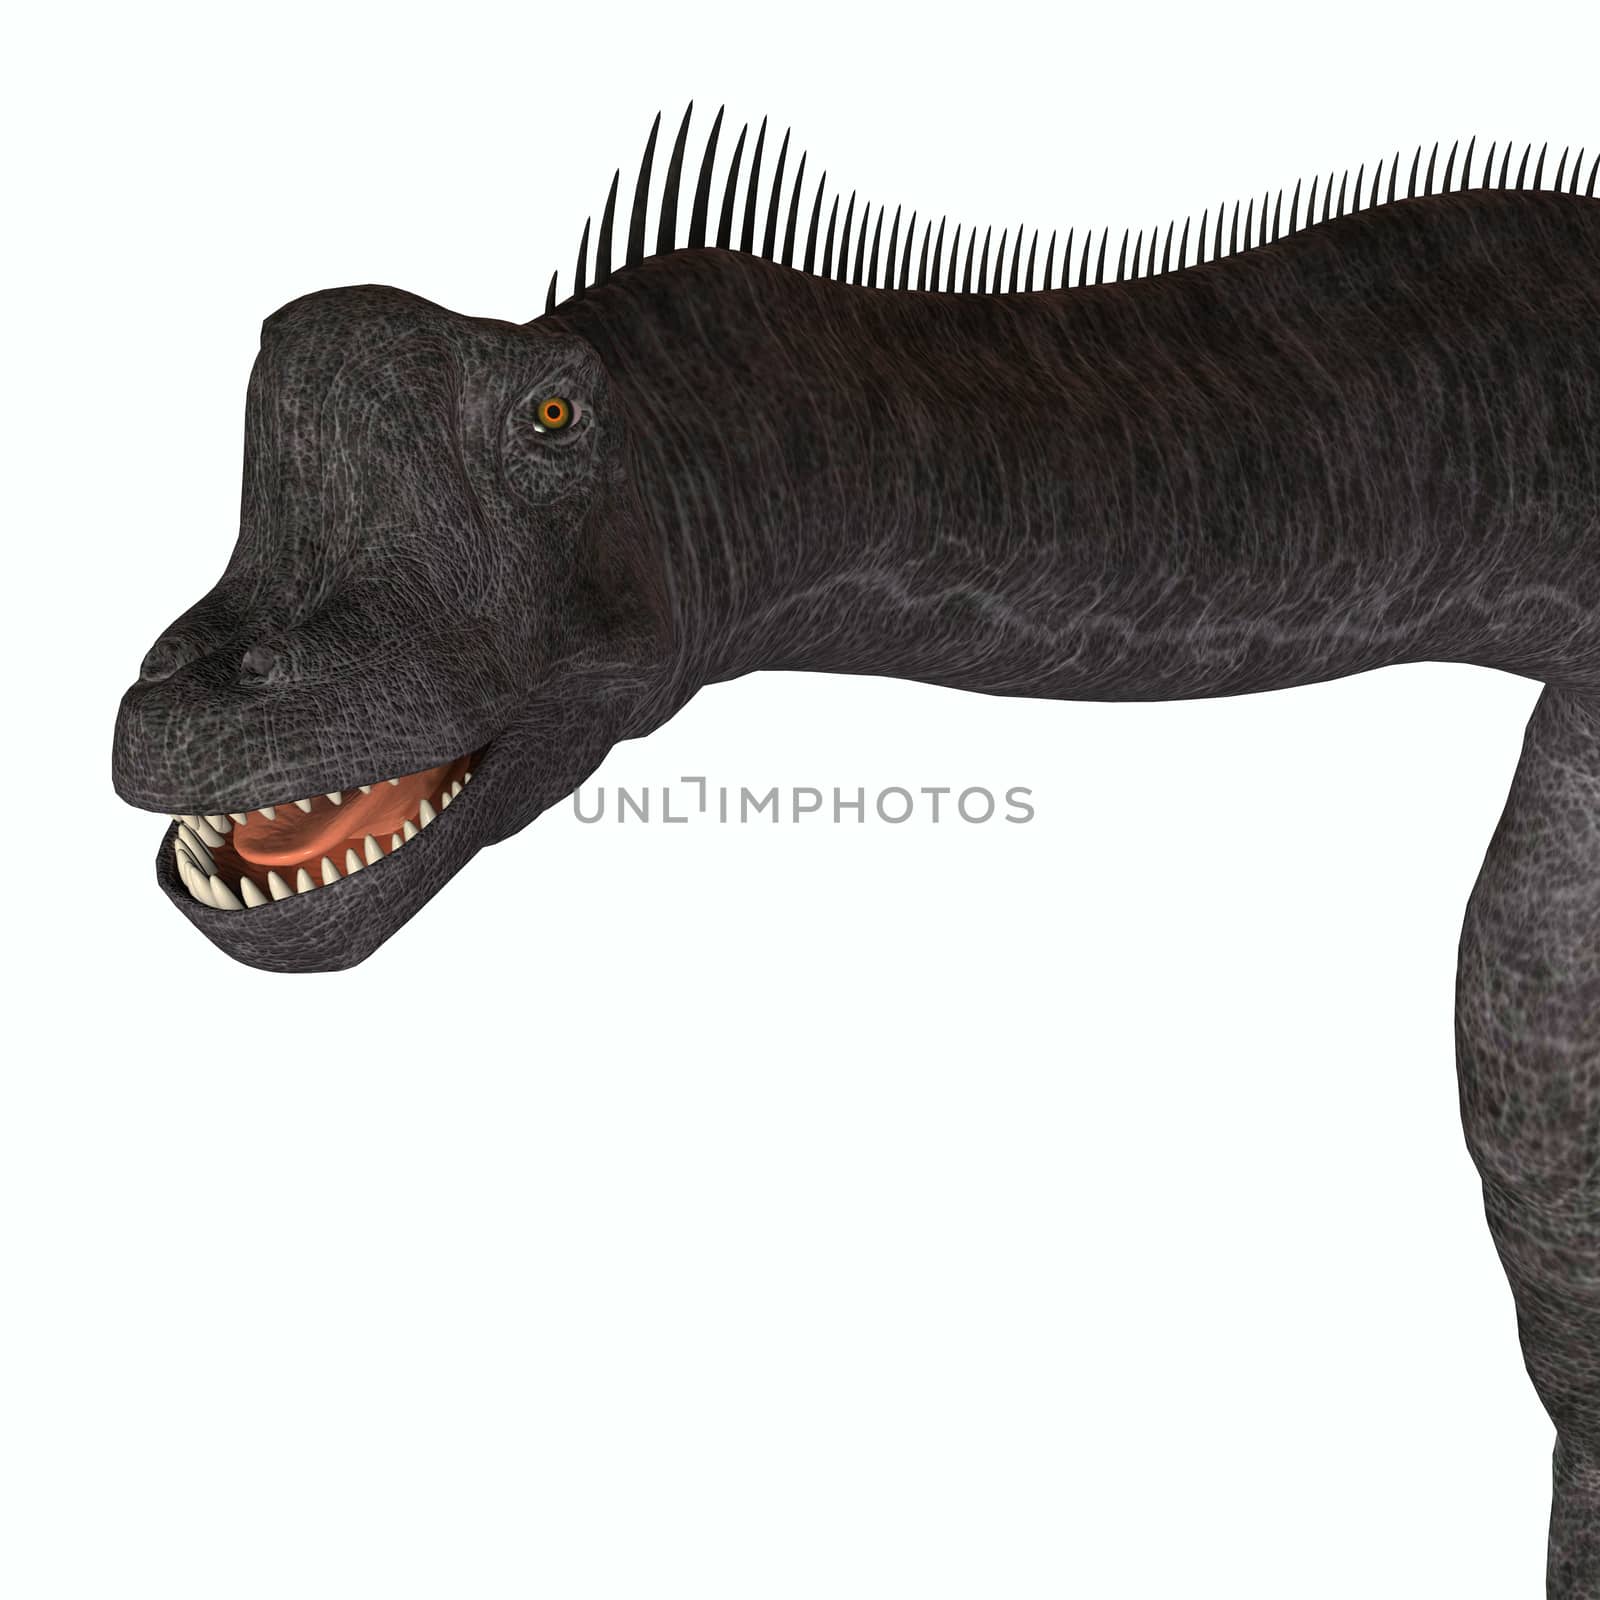 Brachiosaurus was a herbivorous sauropod dinosaur that lived in the Jurassic Period of North America.